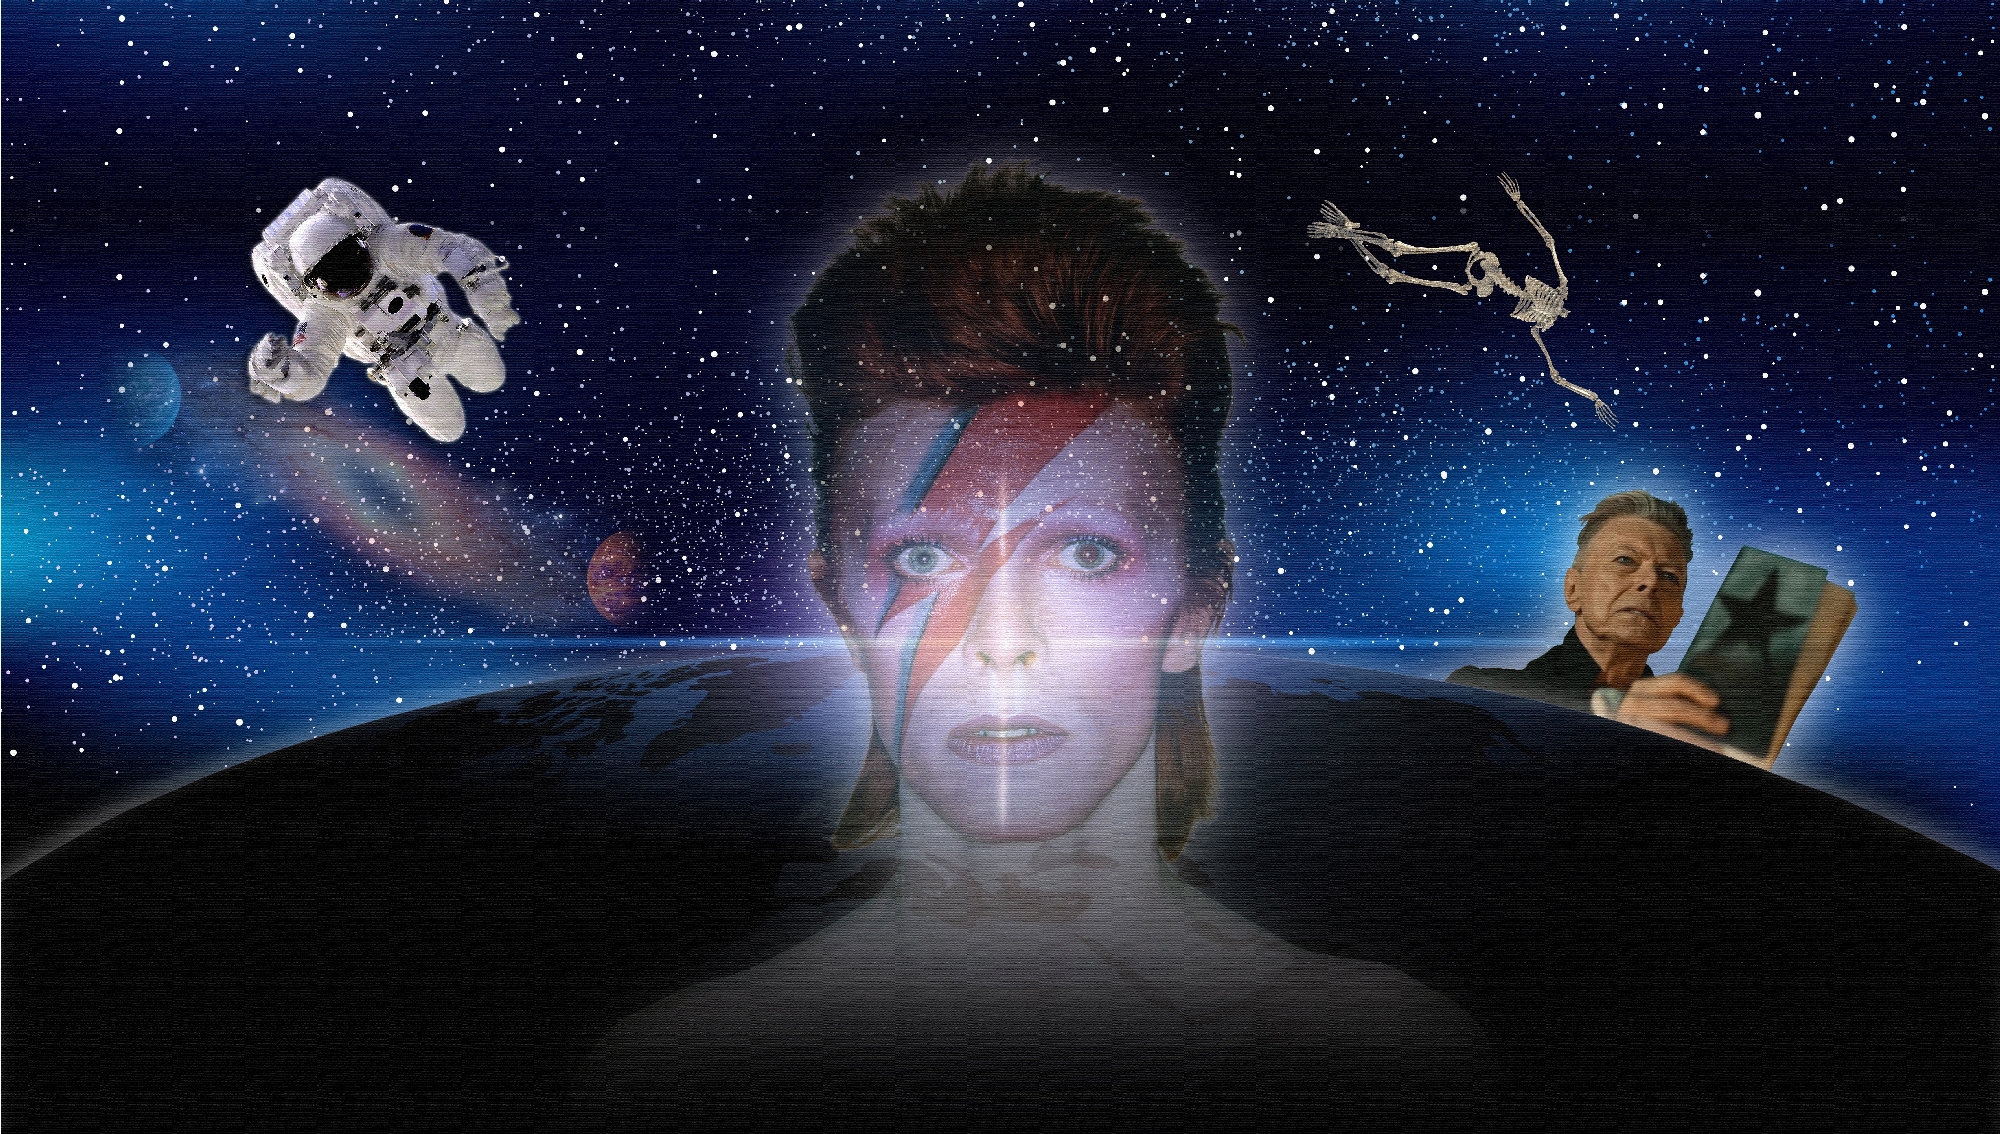 David Bowie Art Creation by Steve Stachini - Starman 120cm x 68cm